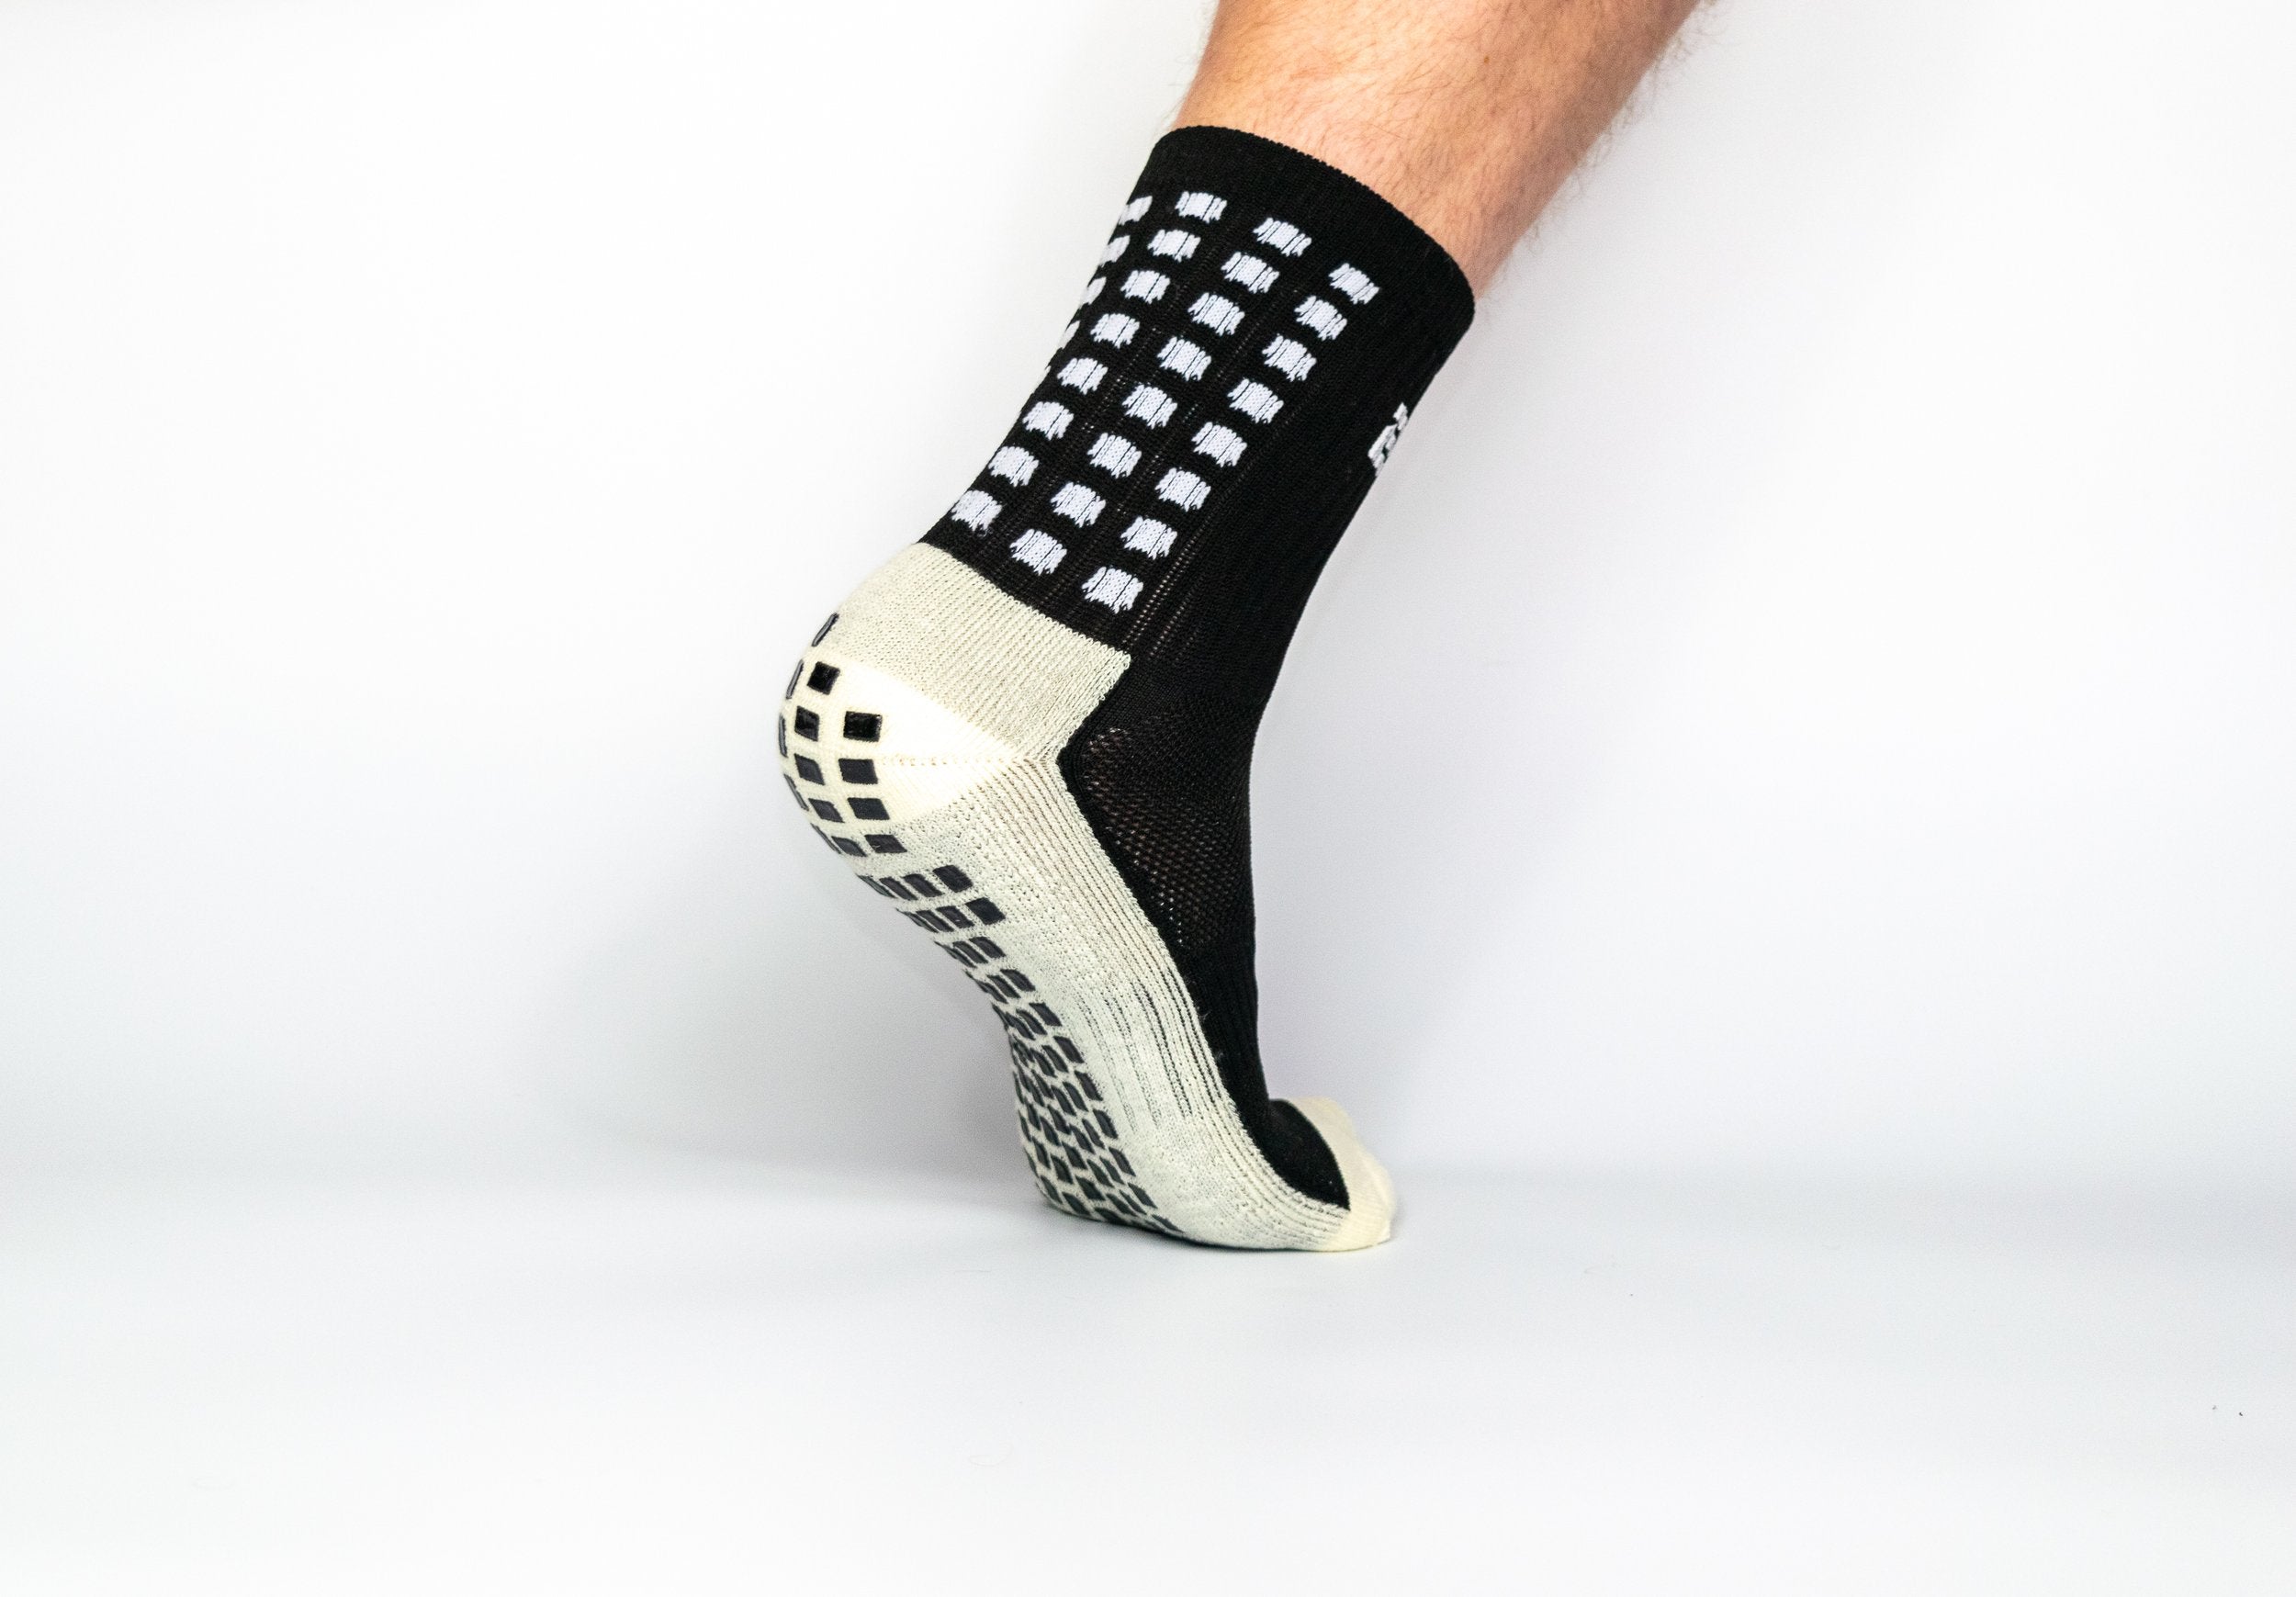 BGK Grip Socks with GOAL-LOCK TECH